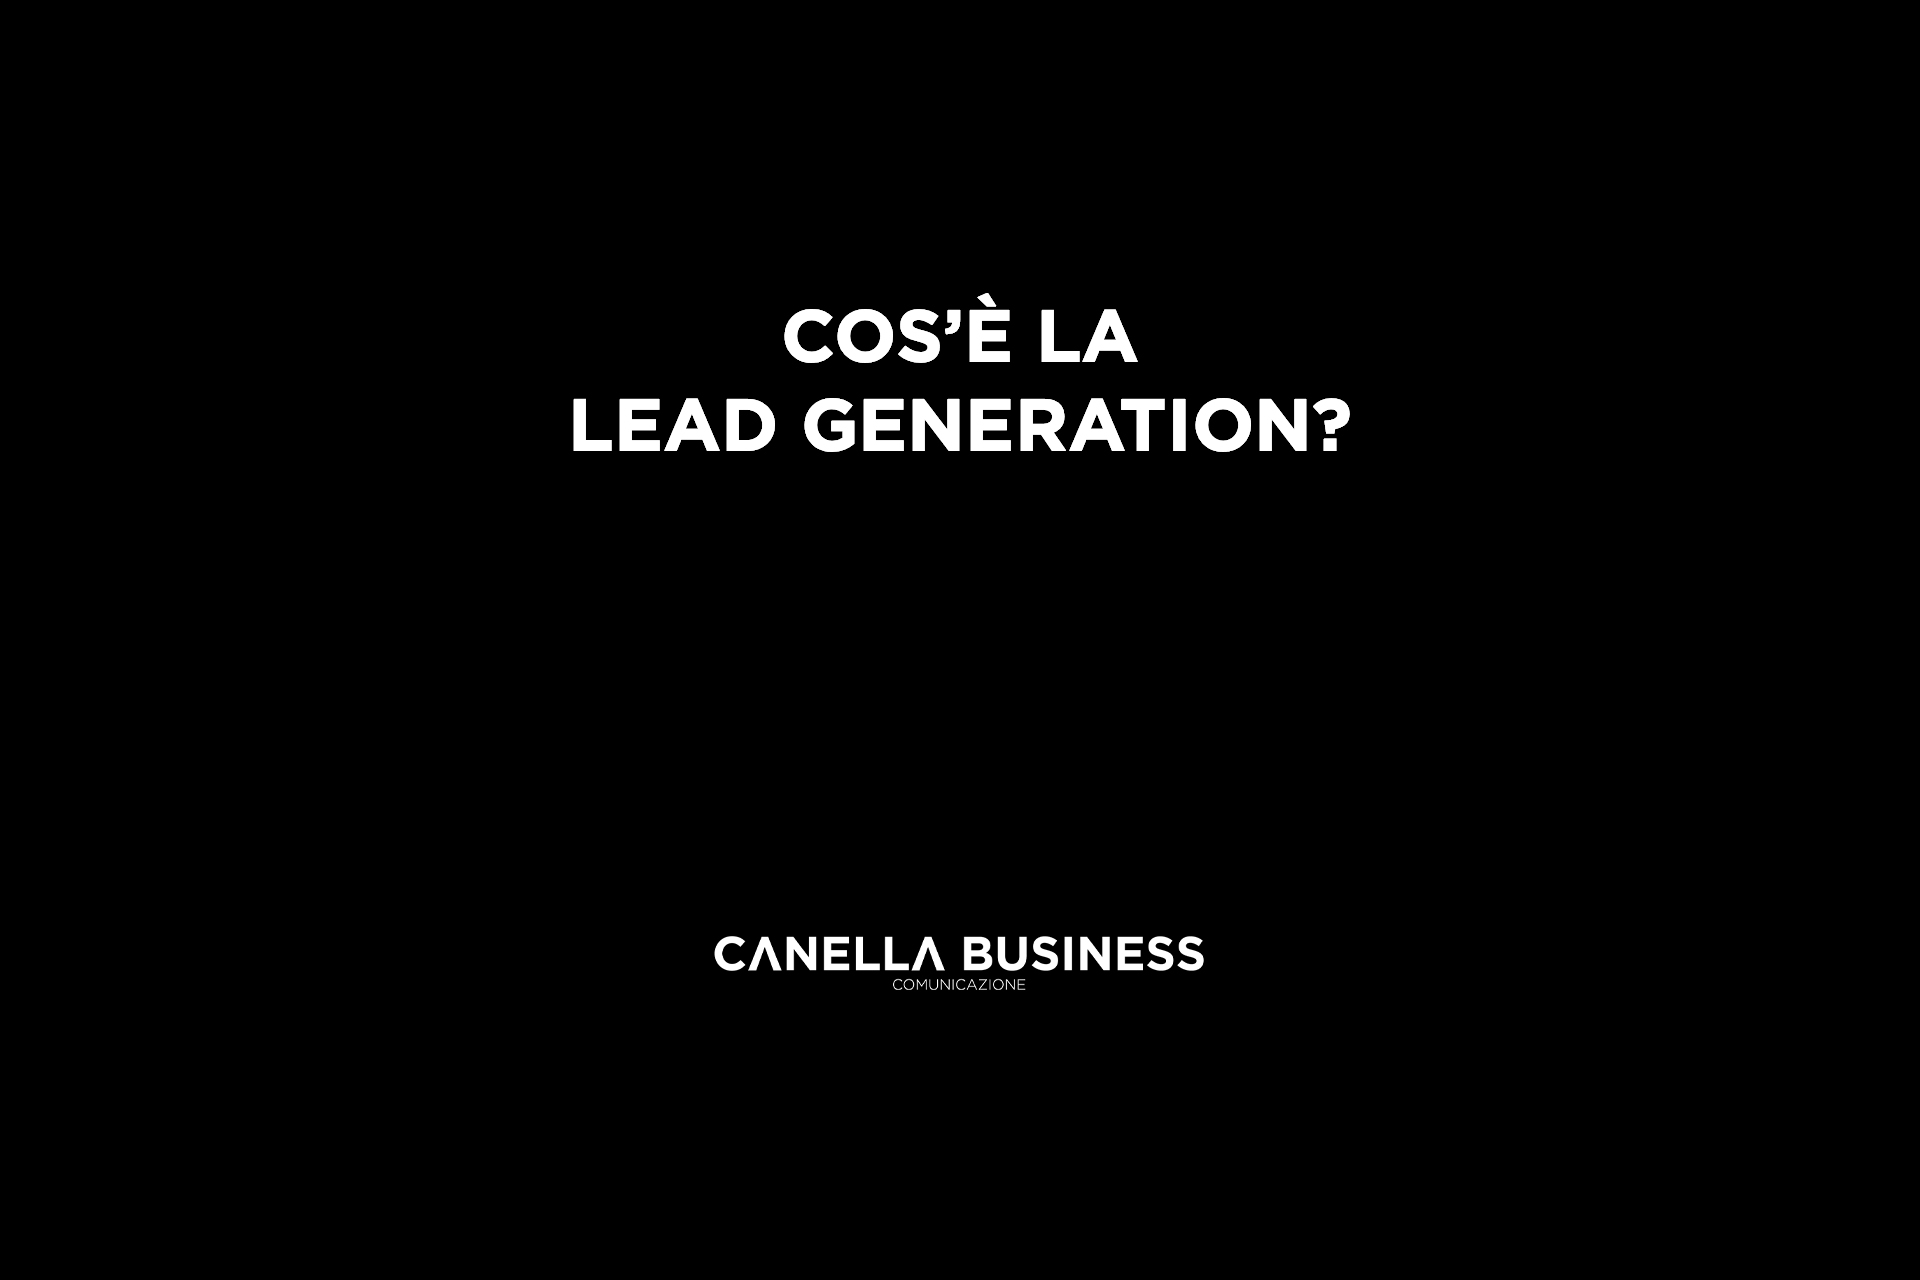 Cos'è la Lead Generation?